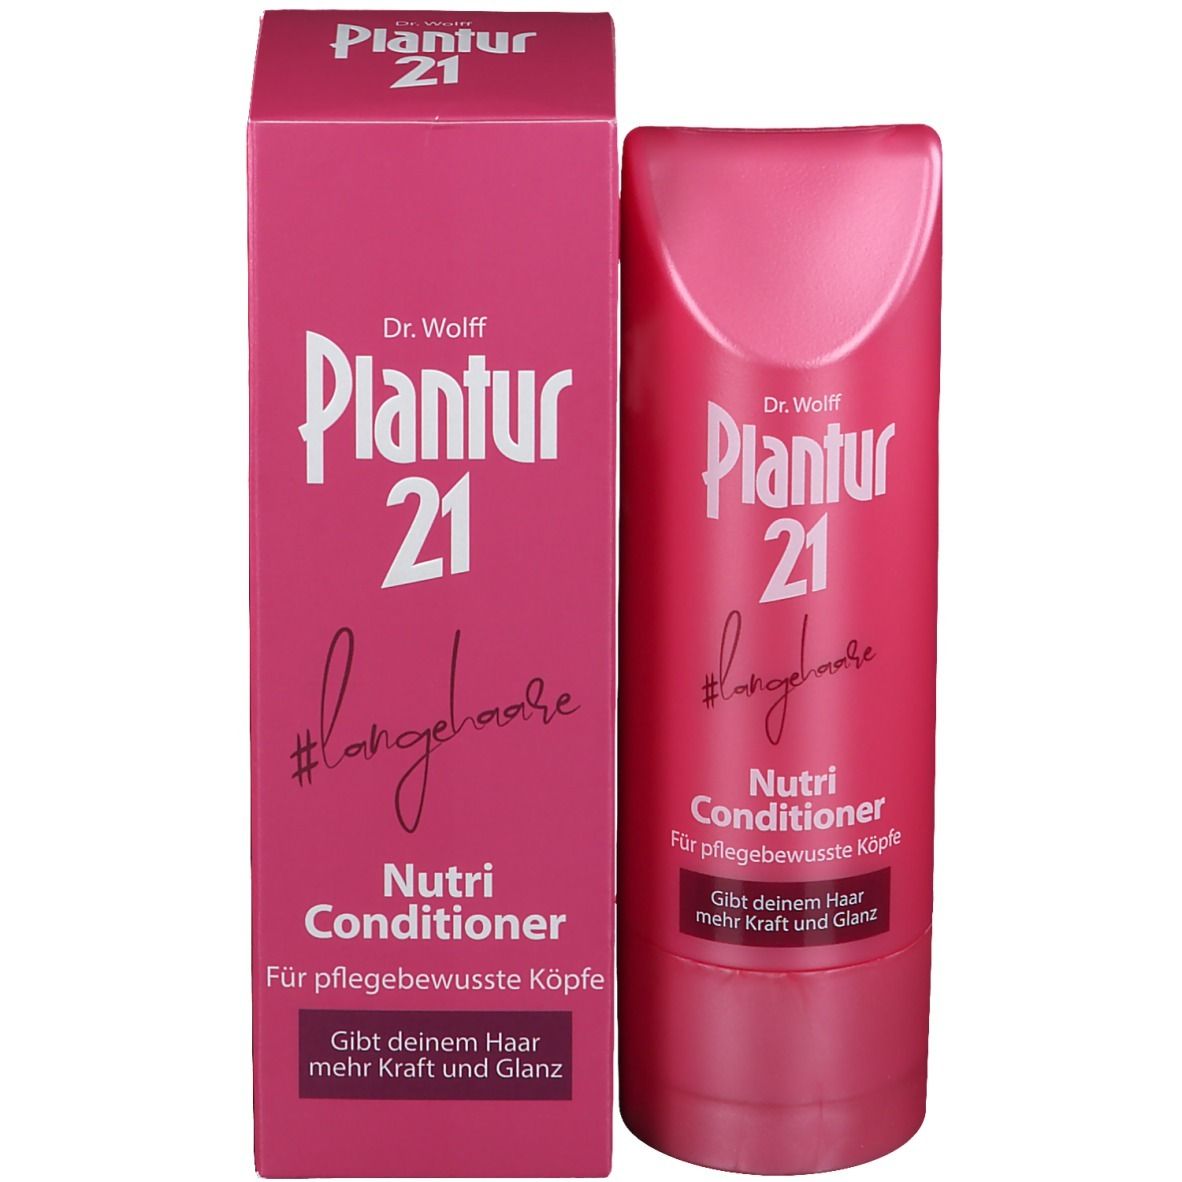 Plantur 21 #cheveuxlongs Nutri Coffeine Conditioner